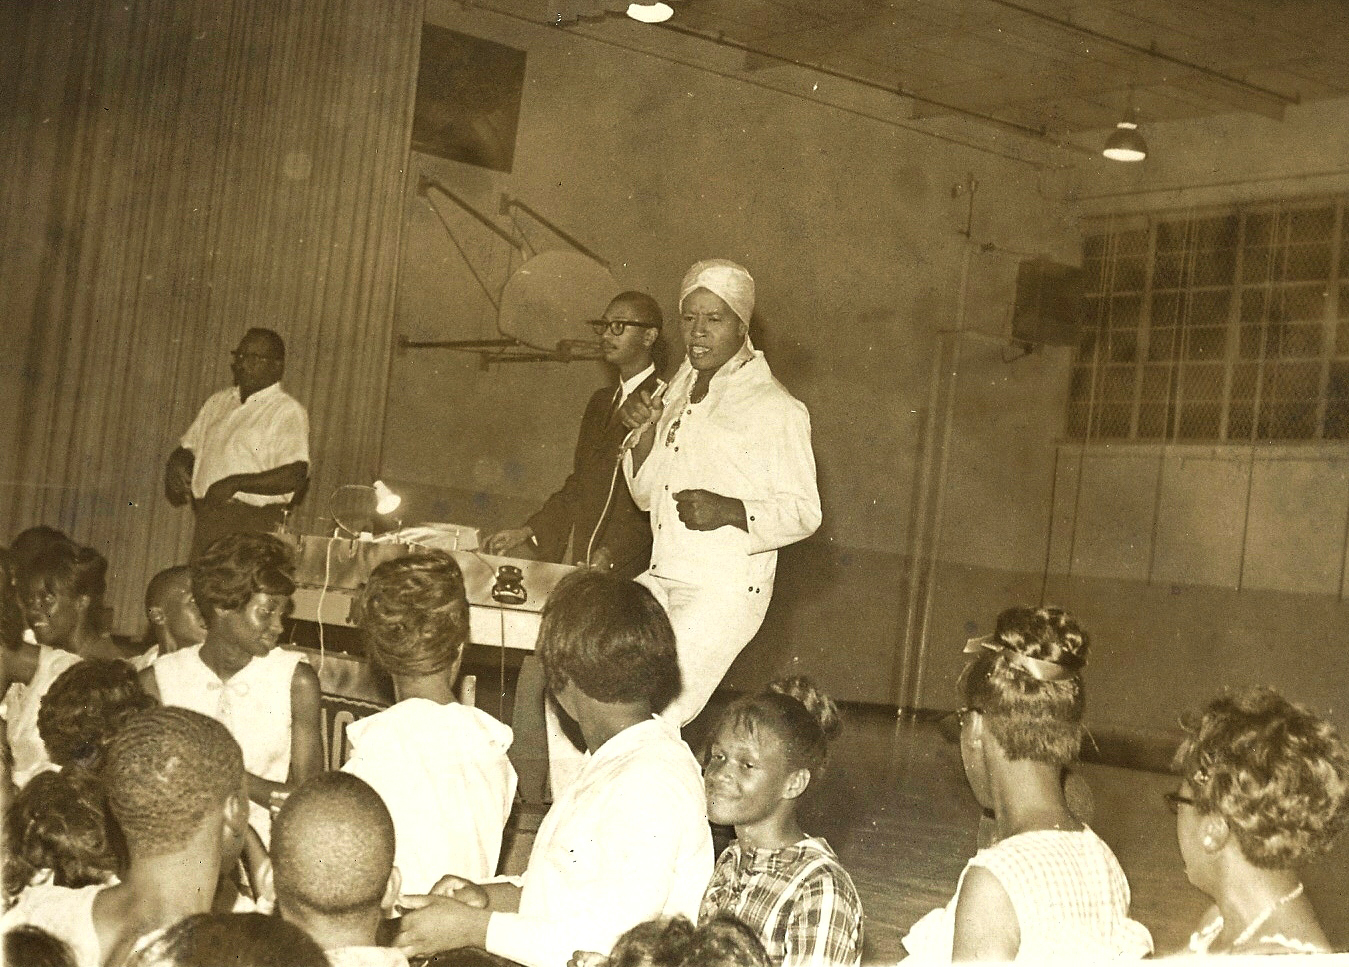 WAOK (Atlanta)'s Burke Johnson and The Mighty Hannibal at a WAOK record hop